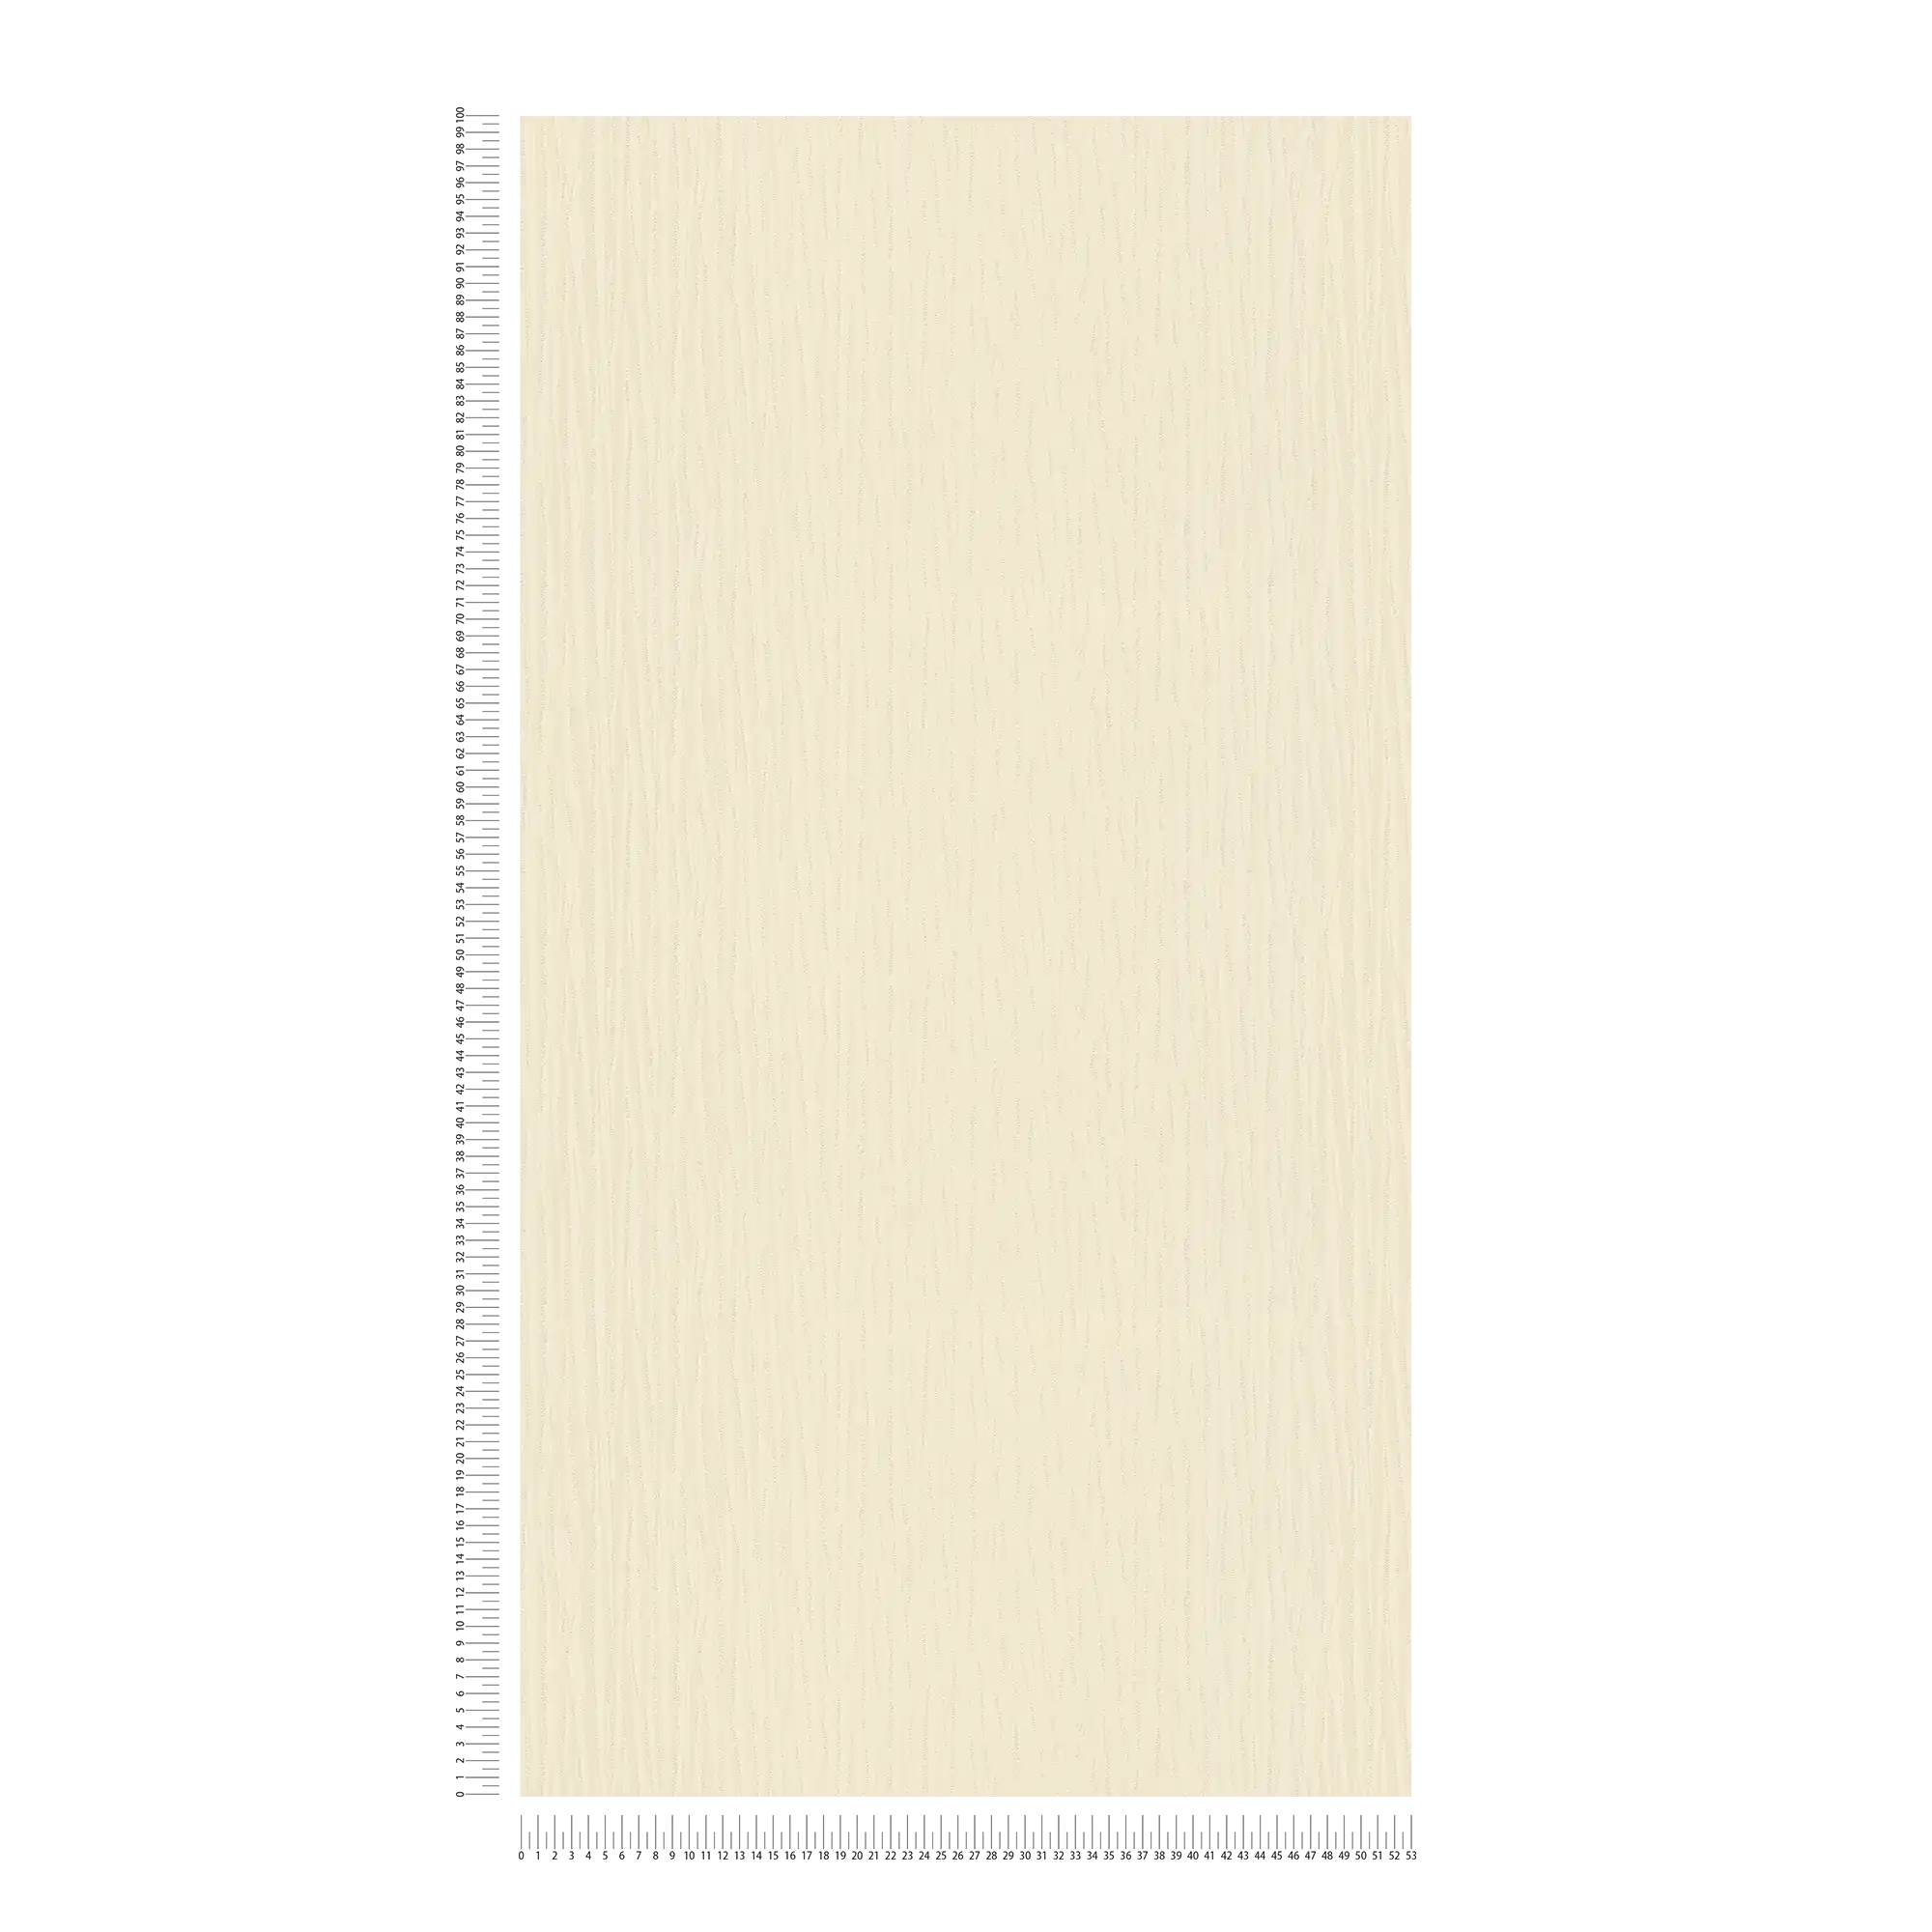             Non-woven wallpaper cream yellow with metallic luster & colour pattern
        